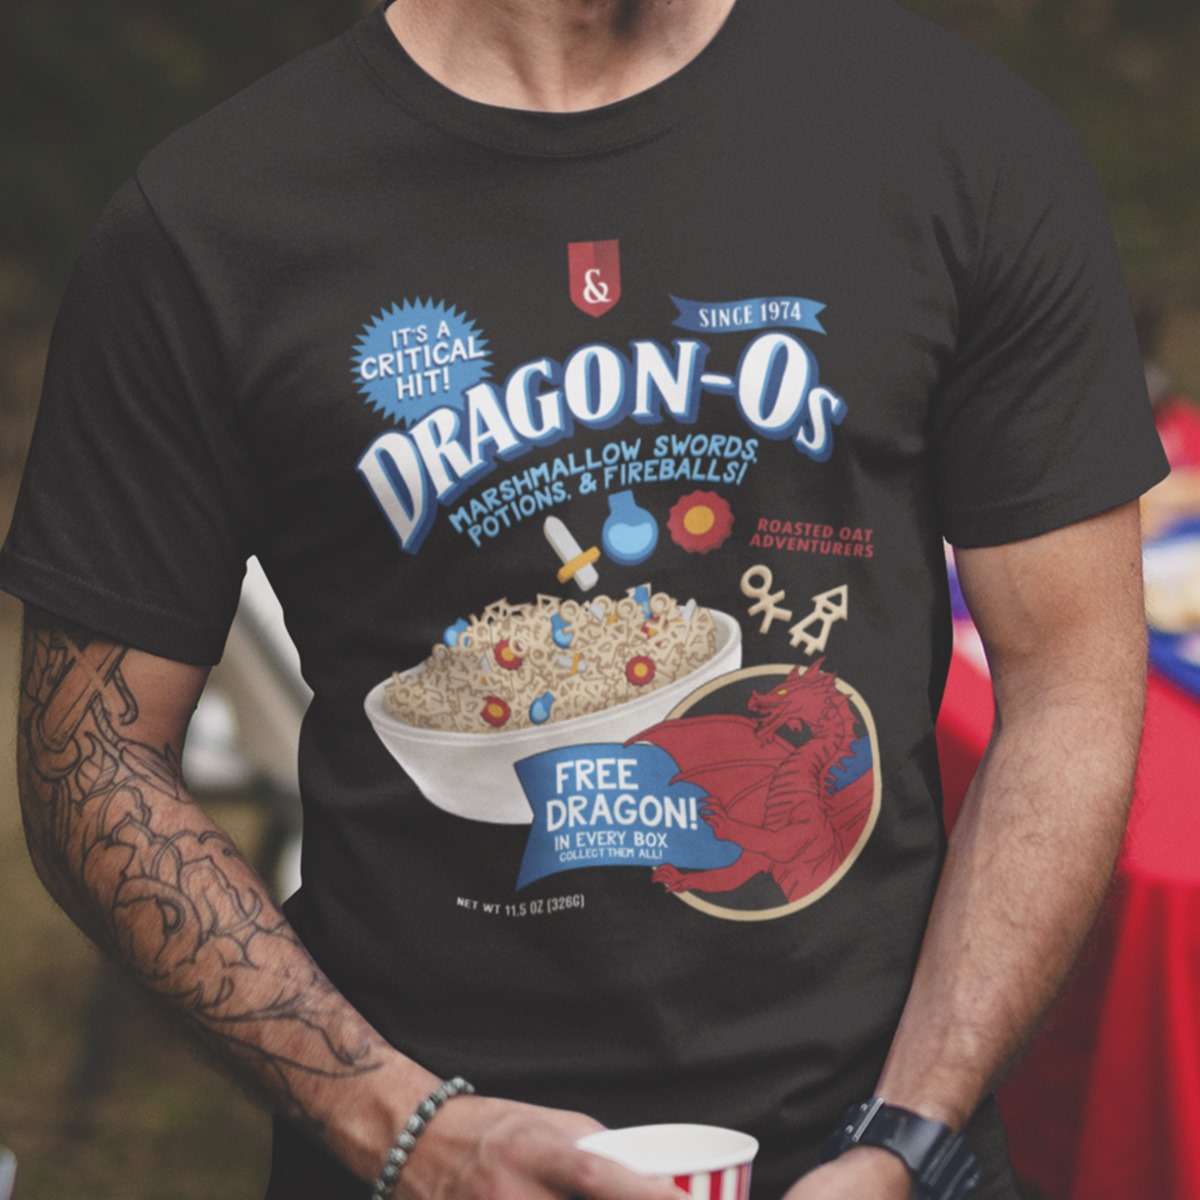 Dragon-os marshmallow swords - Potions and fireball, free dragon